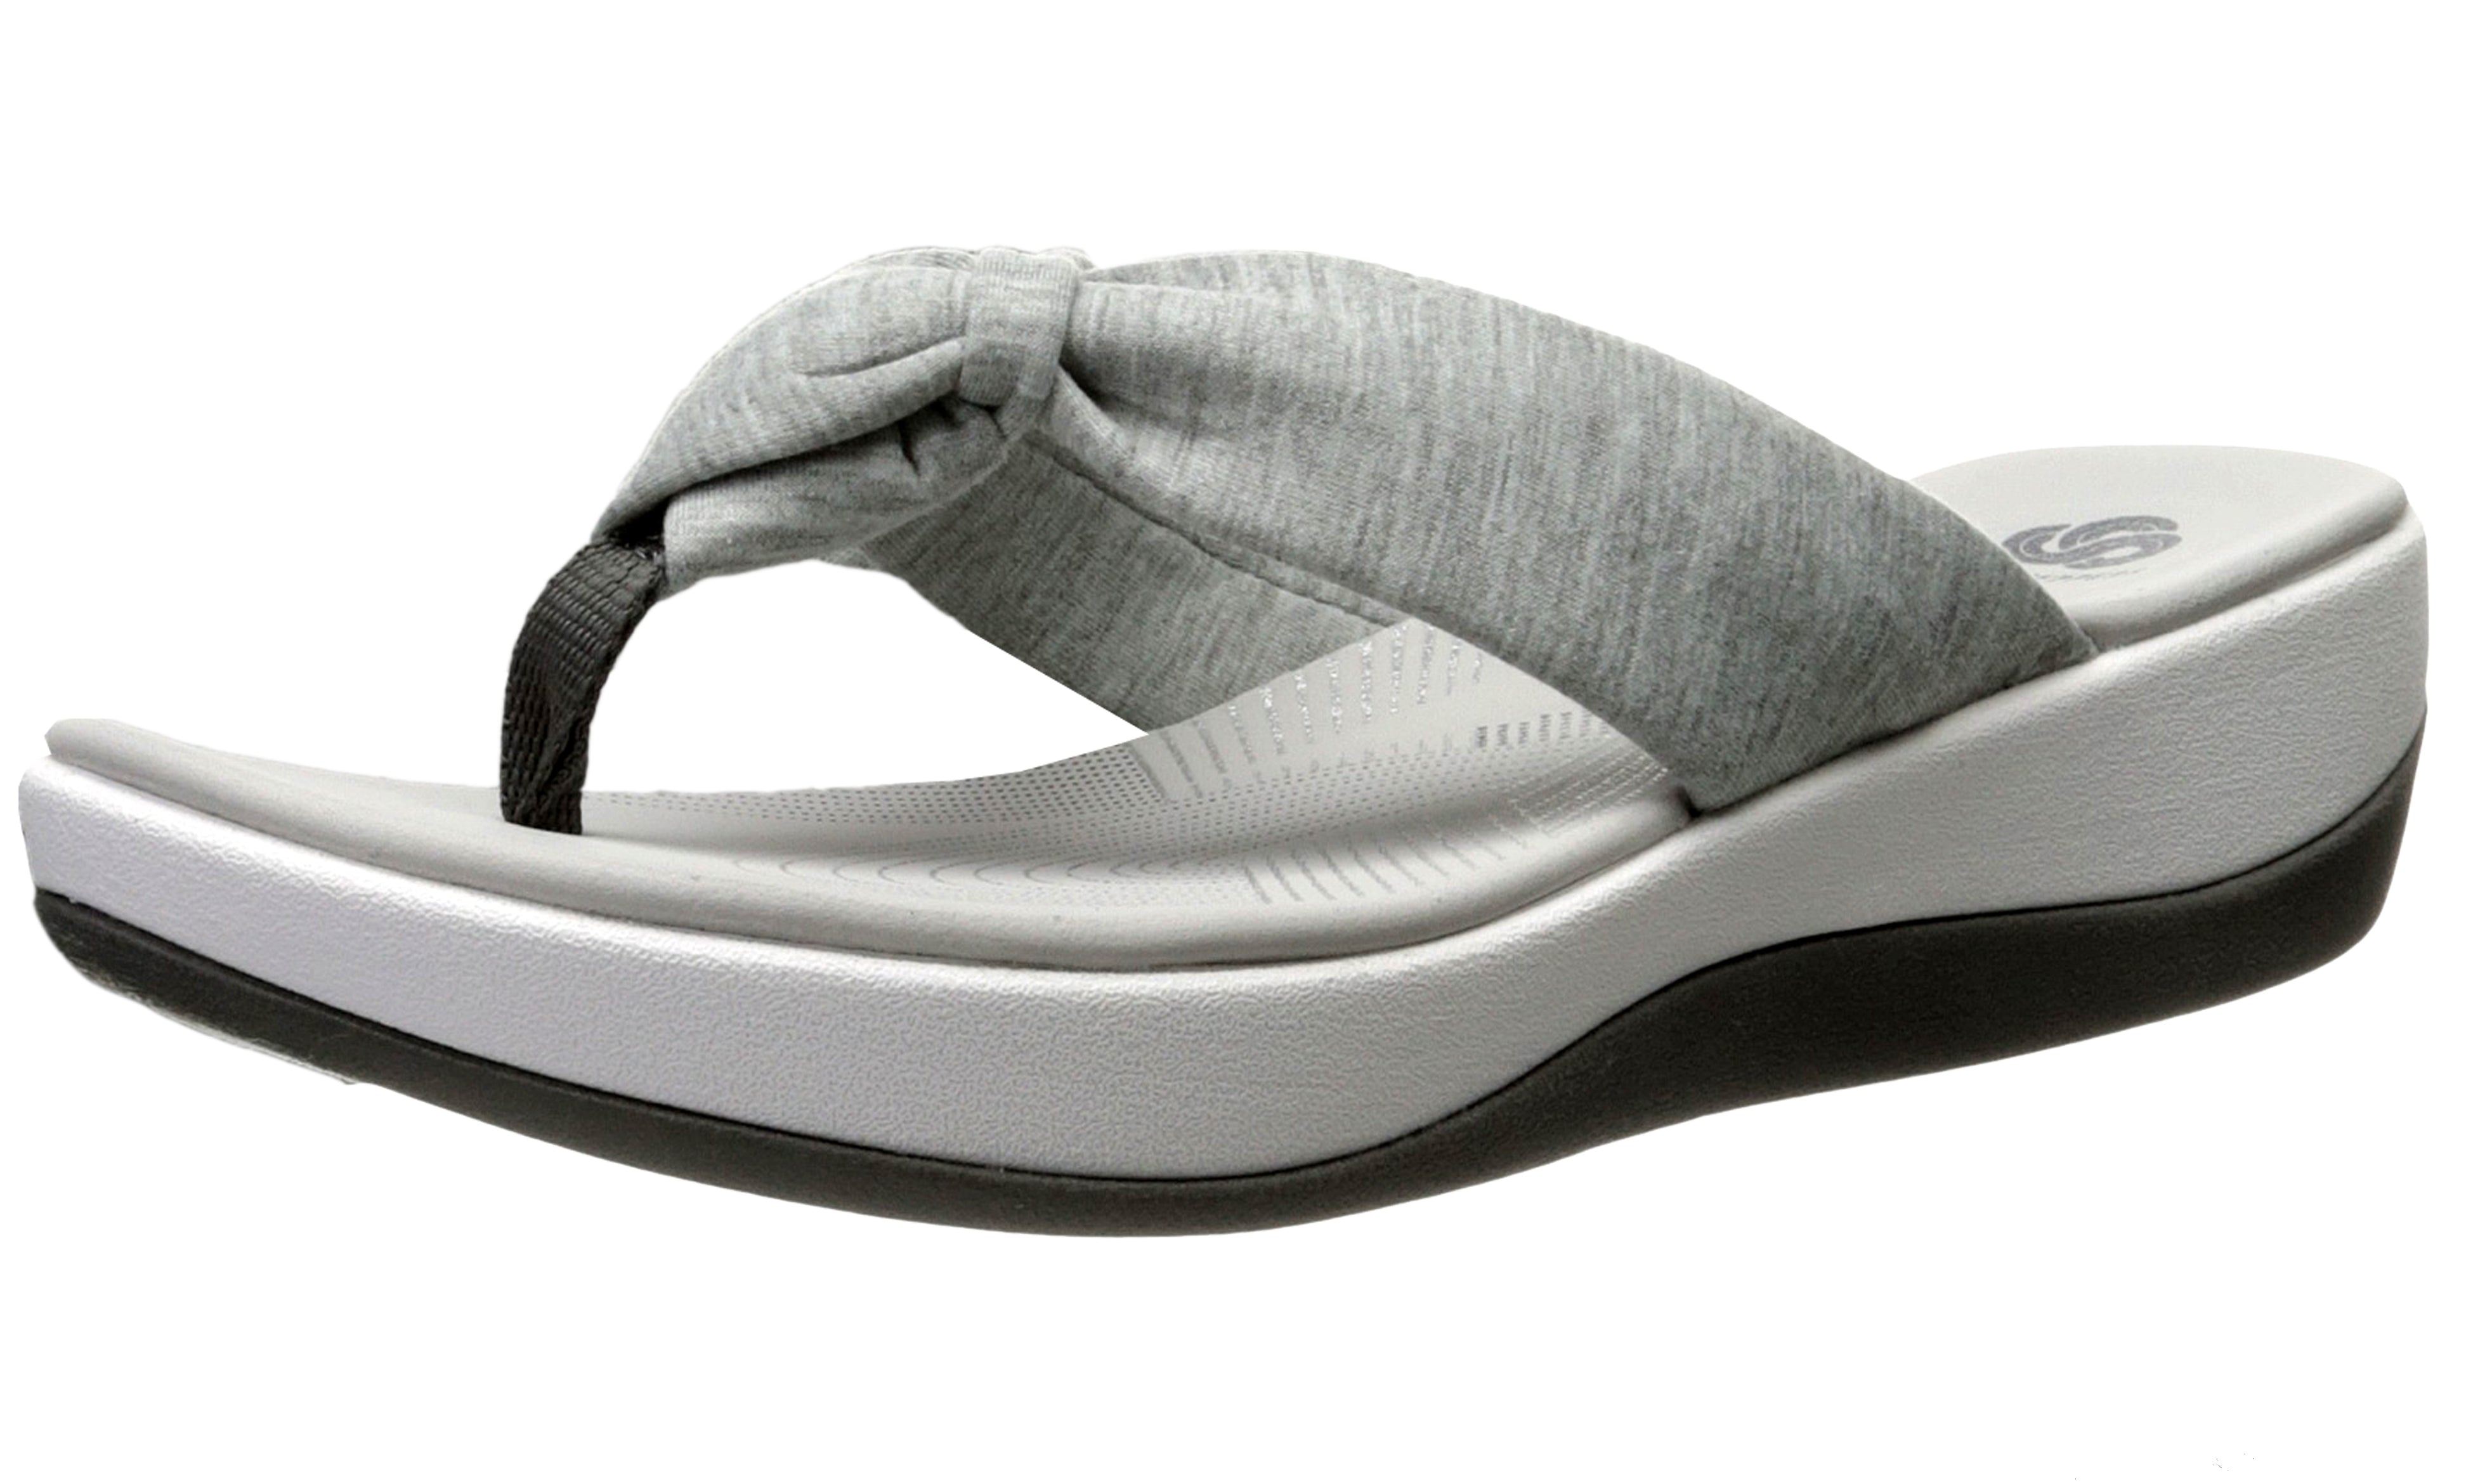 Descubrimiento tonto Verdulero Clarks Arla Glison Thong Sandals with Arch Support - Womens | Shoe City